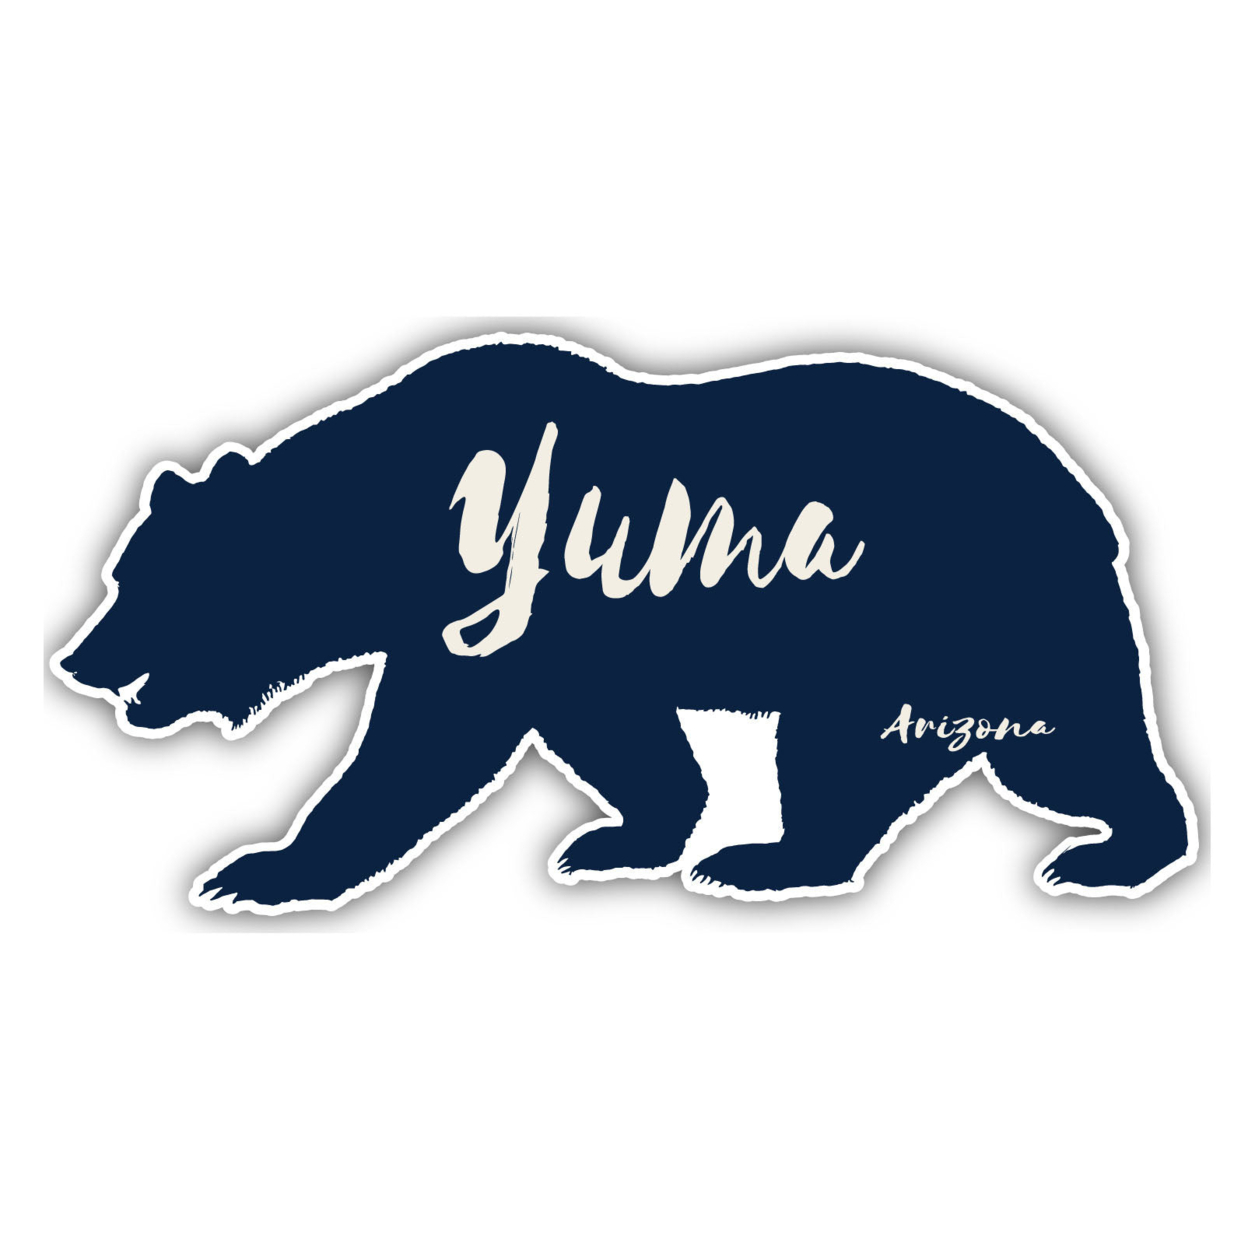 Yuma Arizona Souvenir Decorative Stickers (Choose Theme And Size) - Single Unit, 2-Inch, Bear